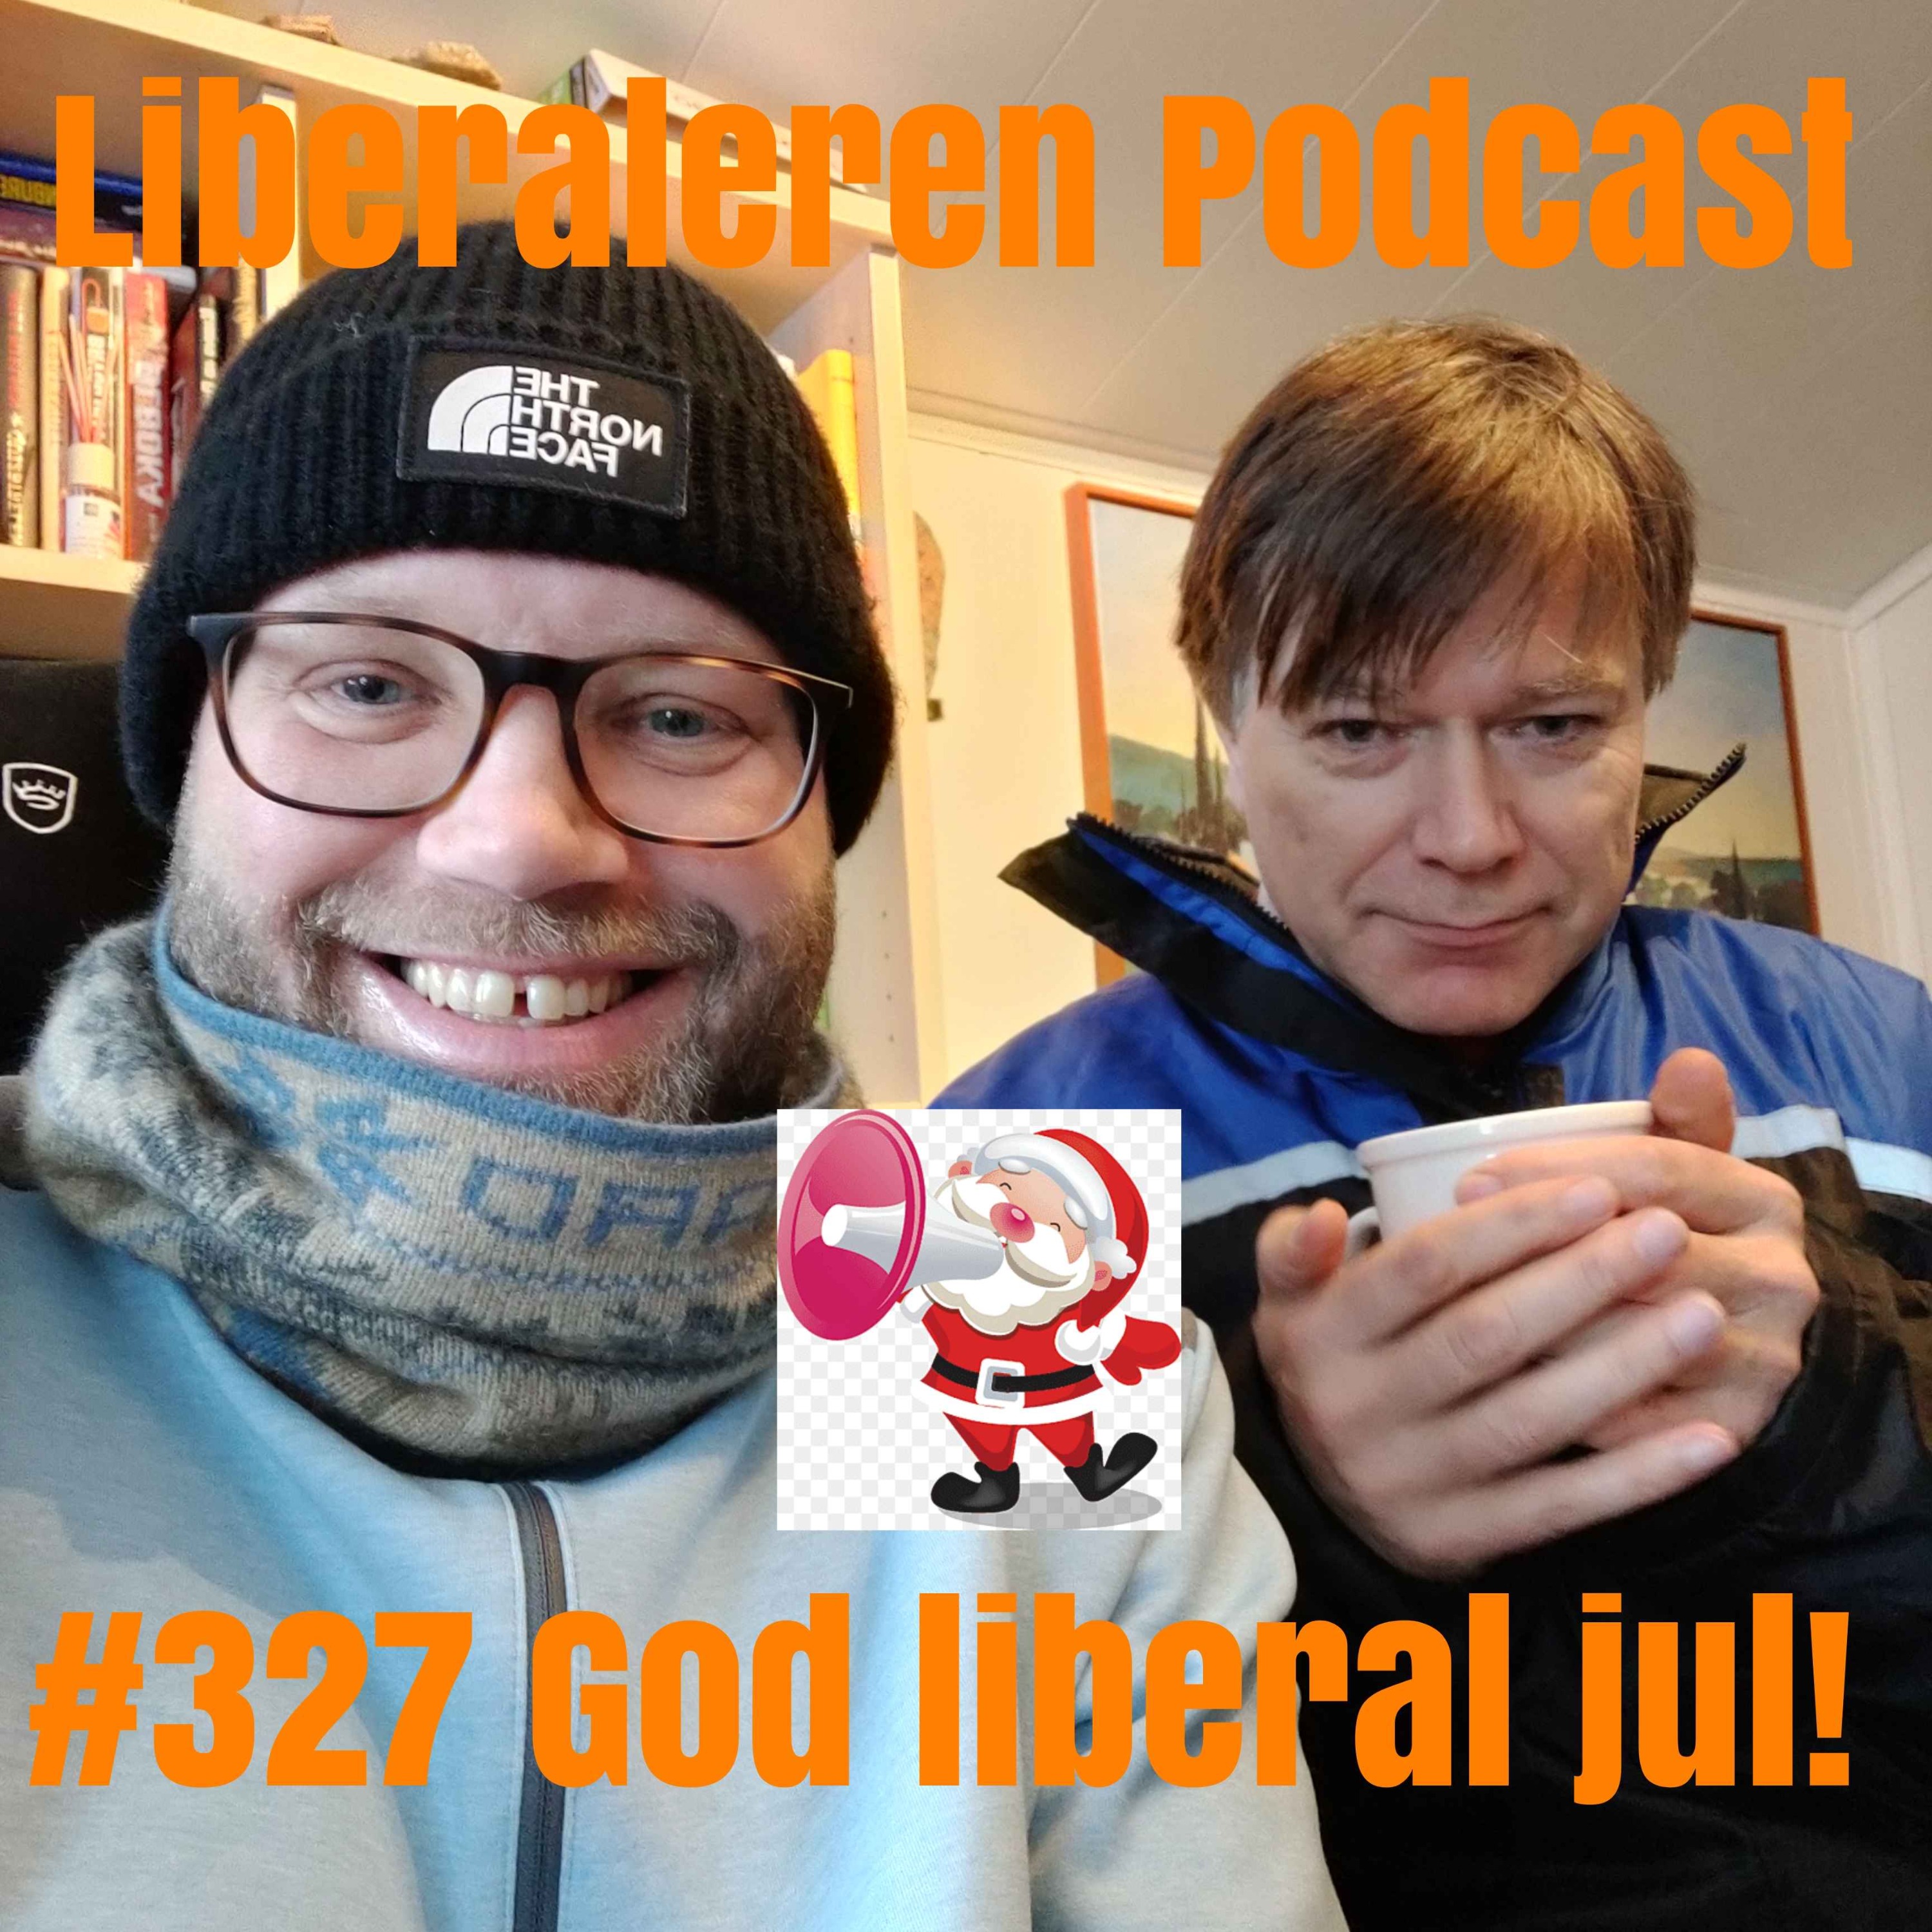 #327 God liberal jul!